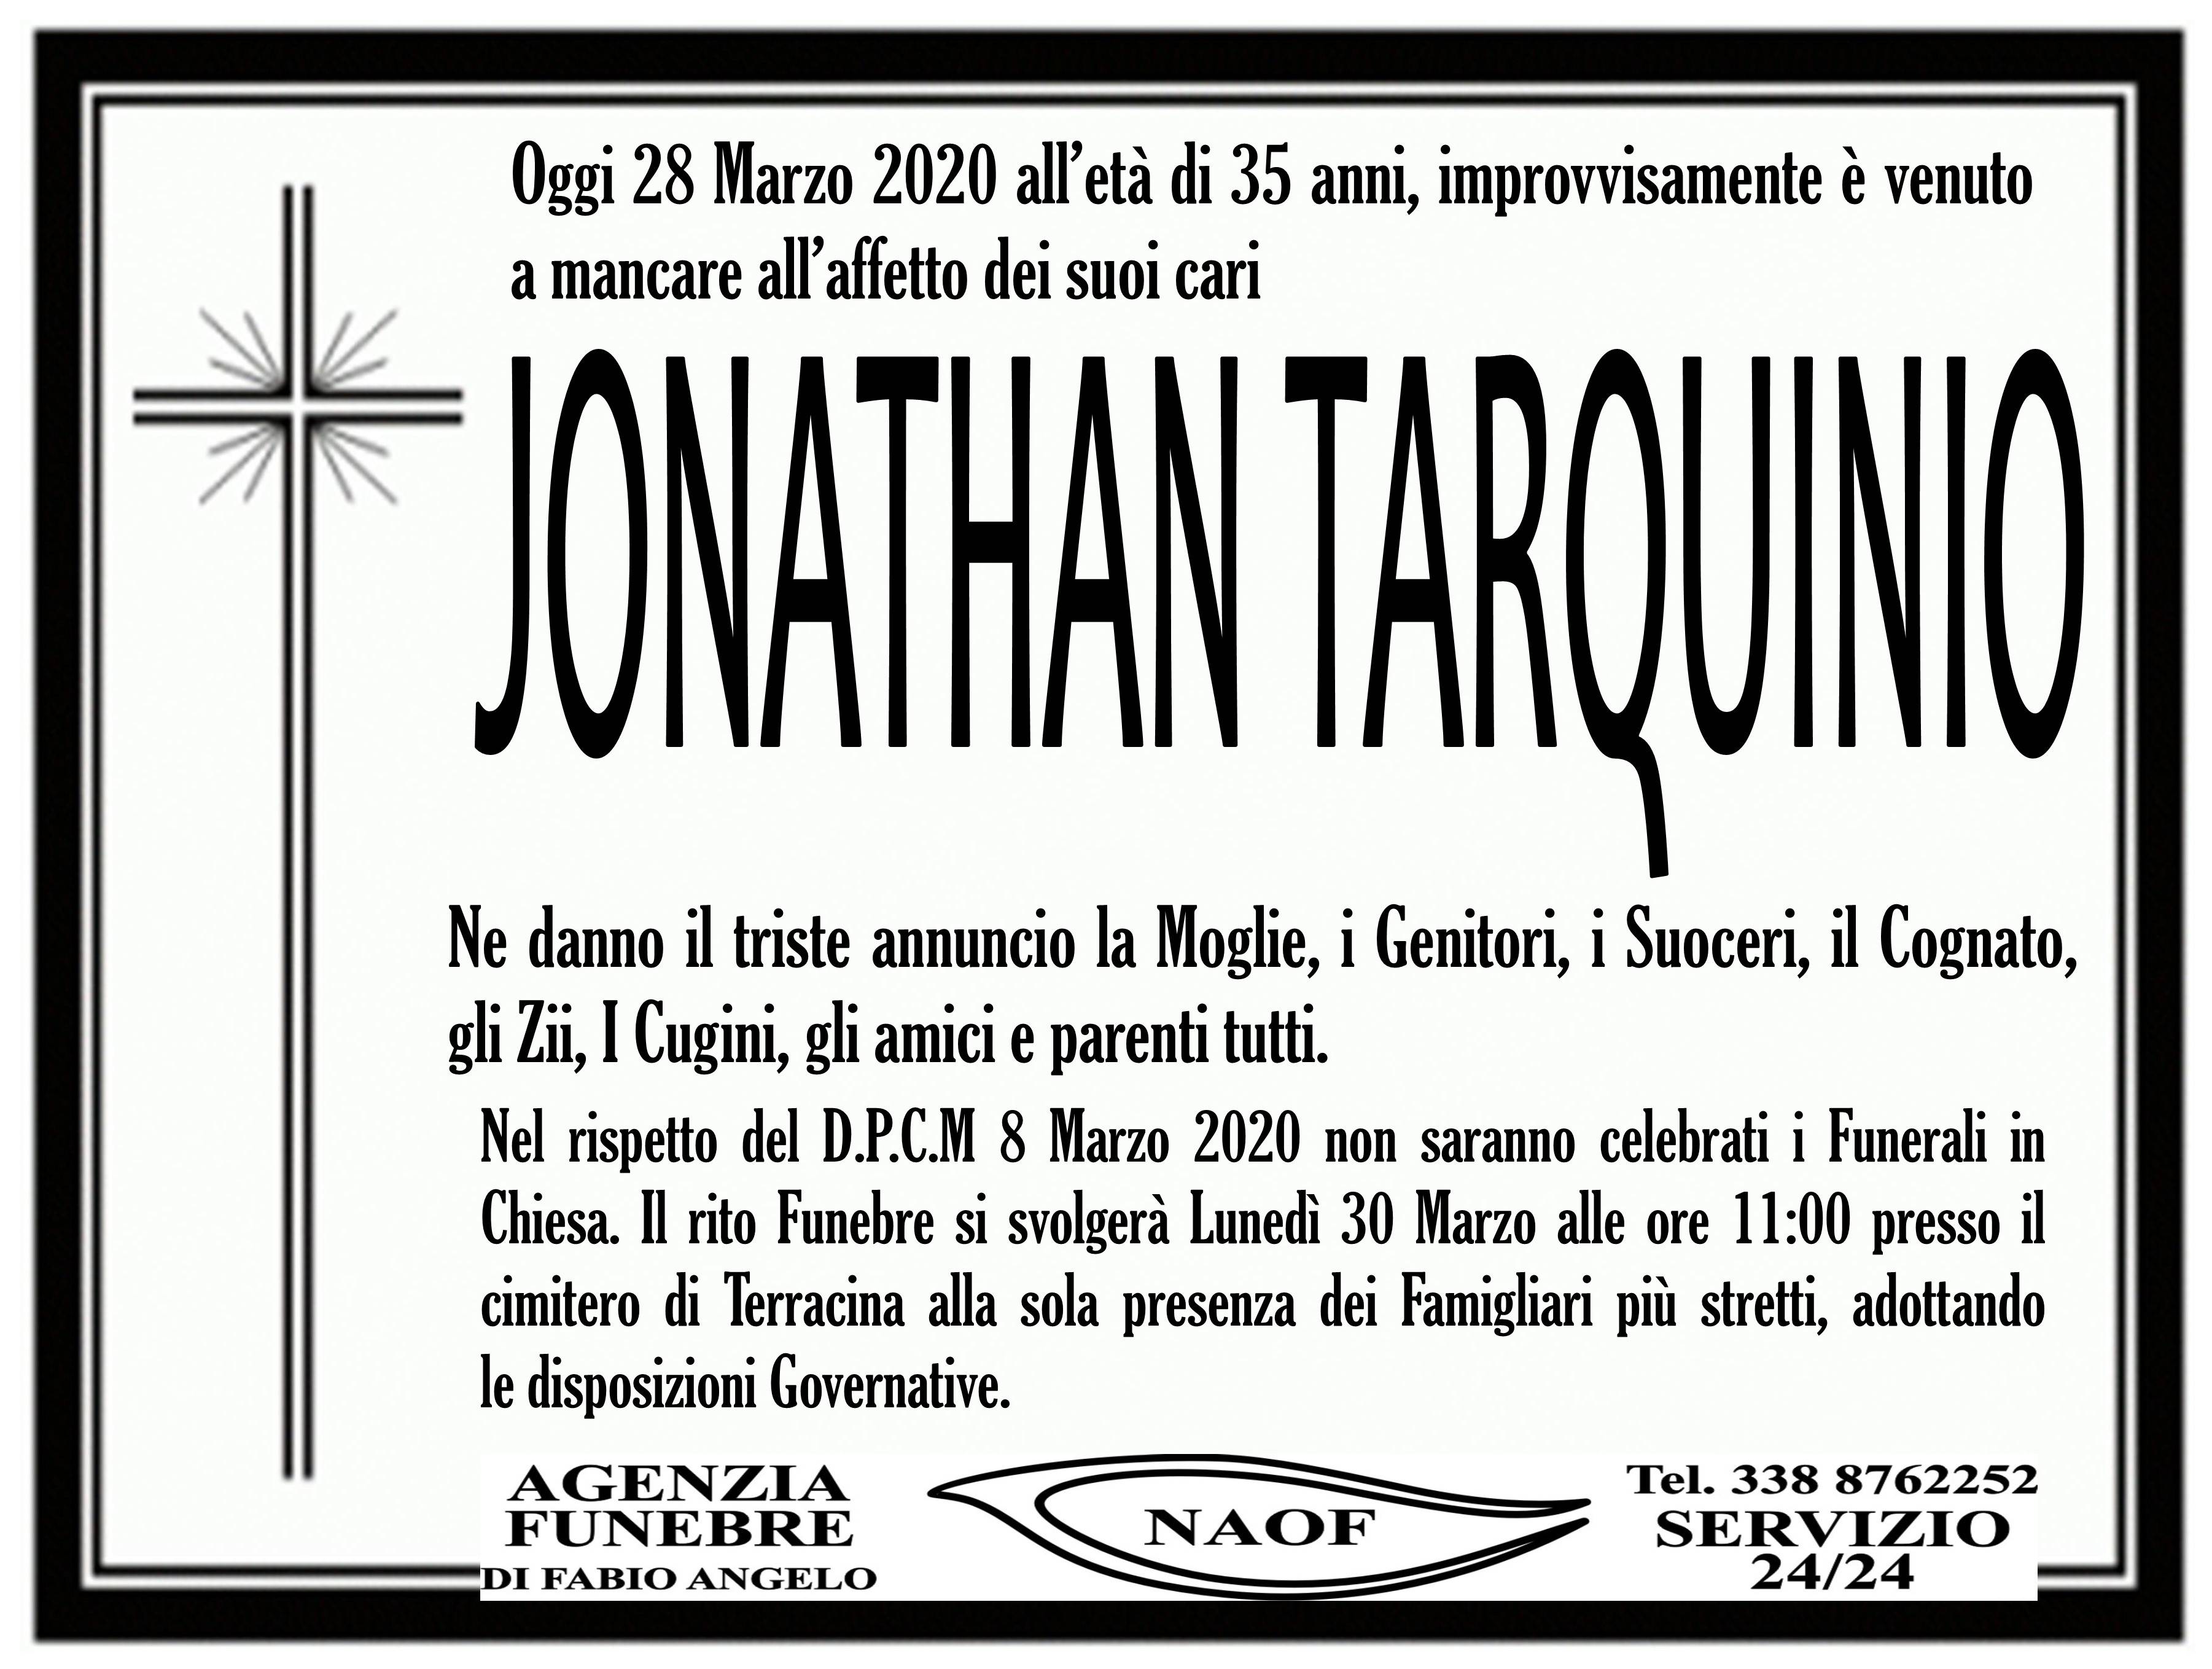 Jonathan Tarquinio